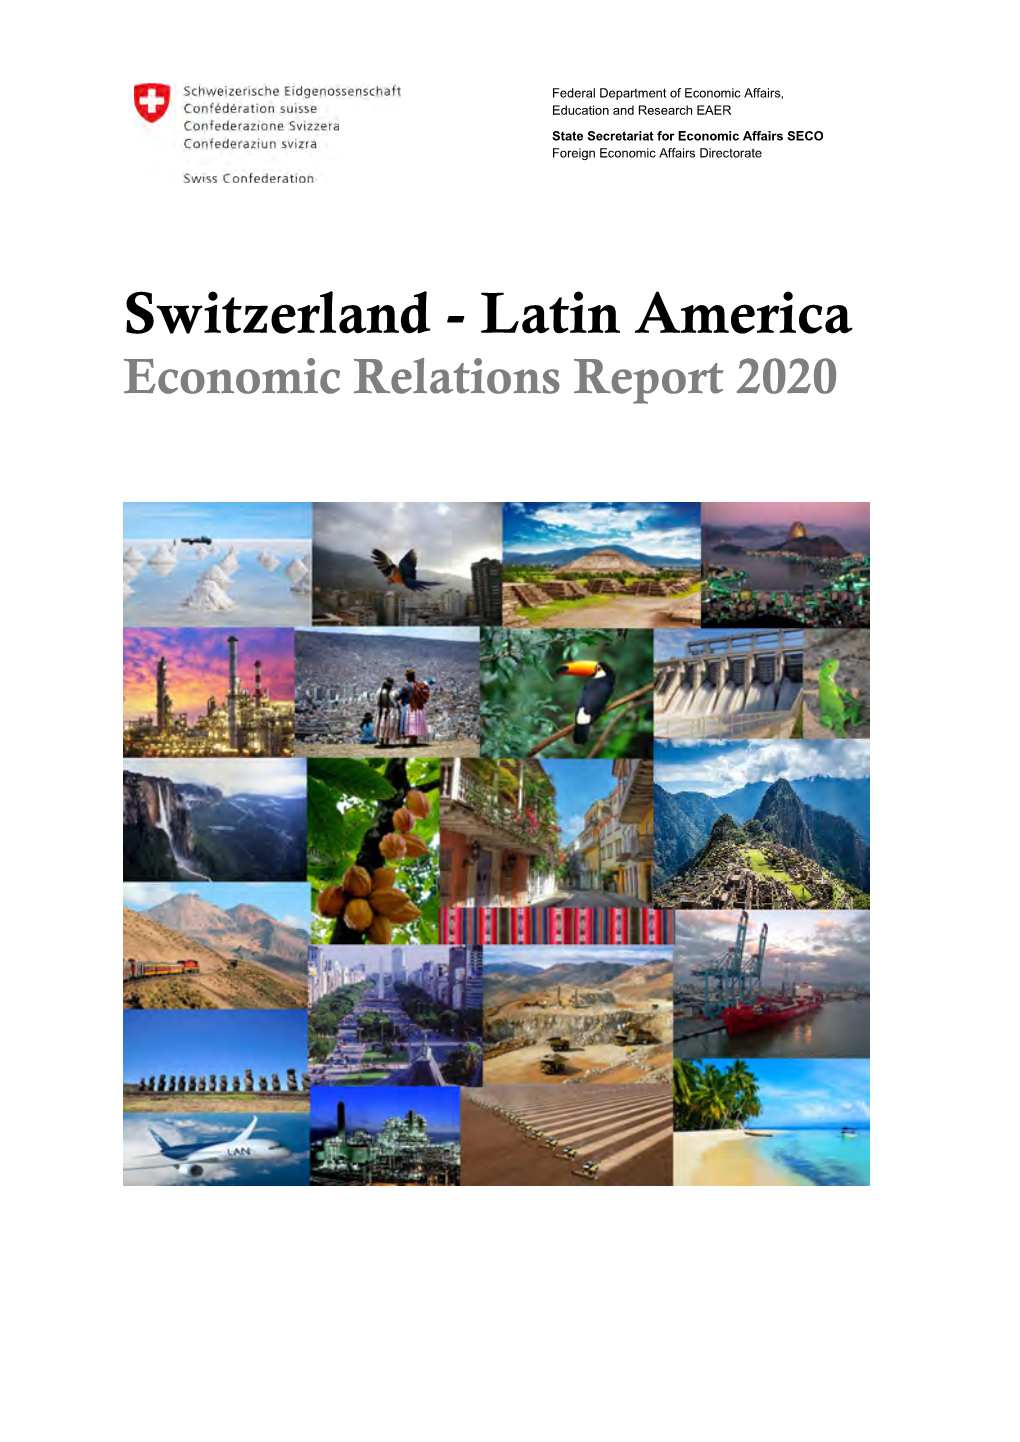 Latin America Economic Relations Report 2020